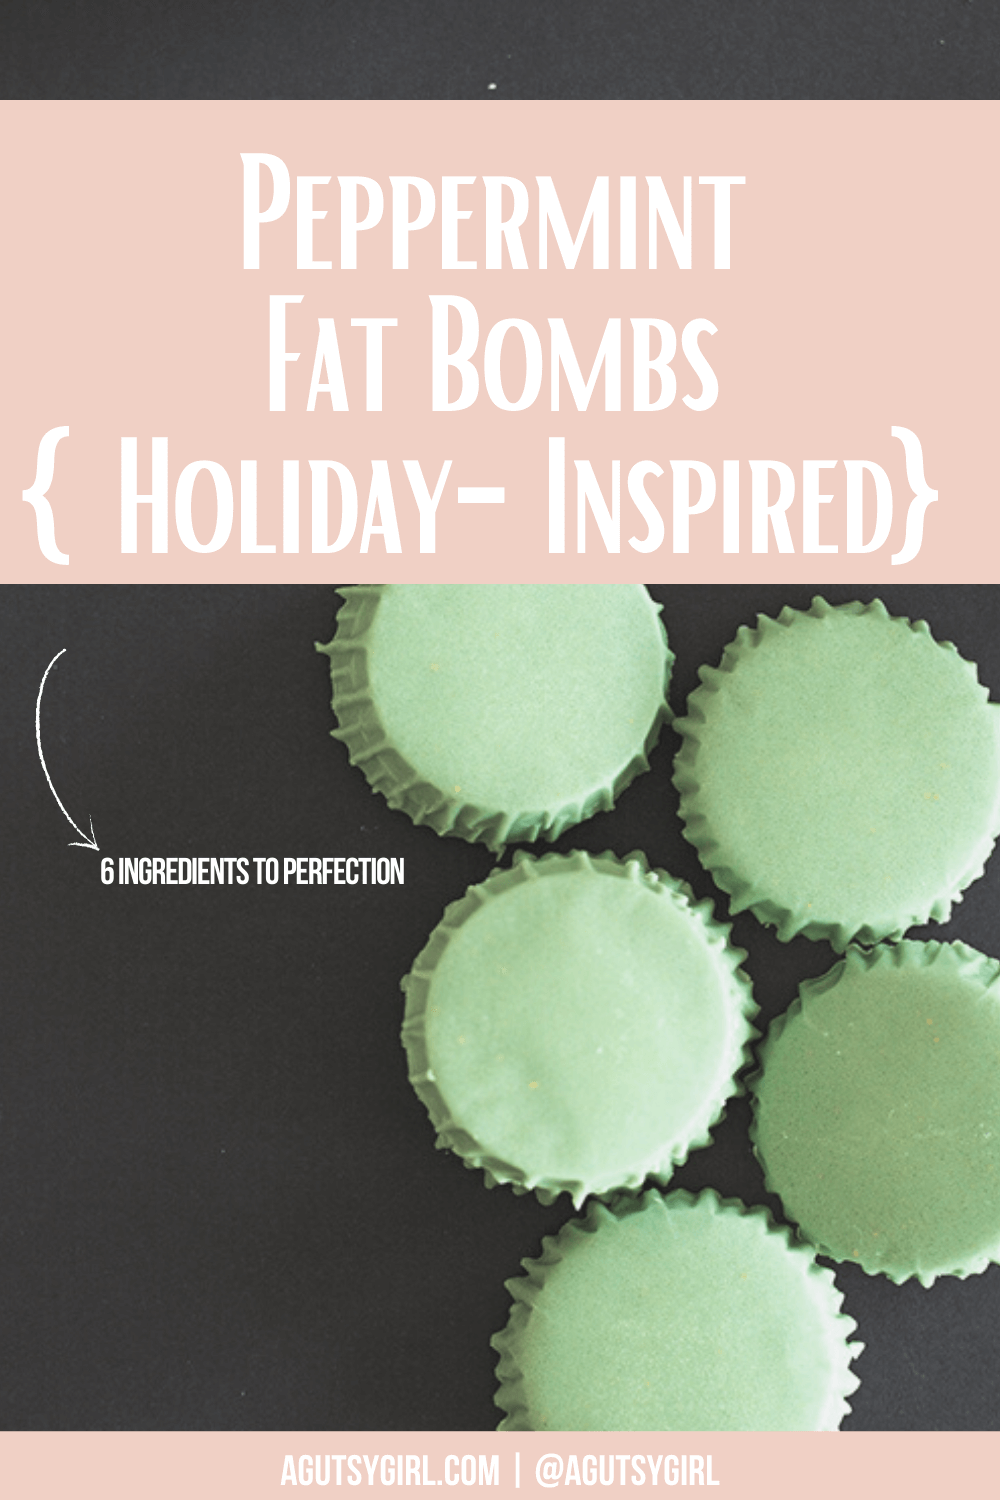 Peppermint Fat Bombs agutsygirl.com #guthealth #ketorecipes #fatbomb #holidayrecipes